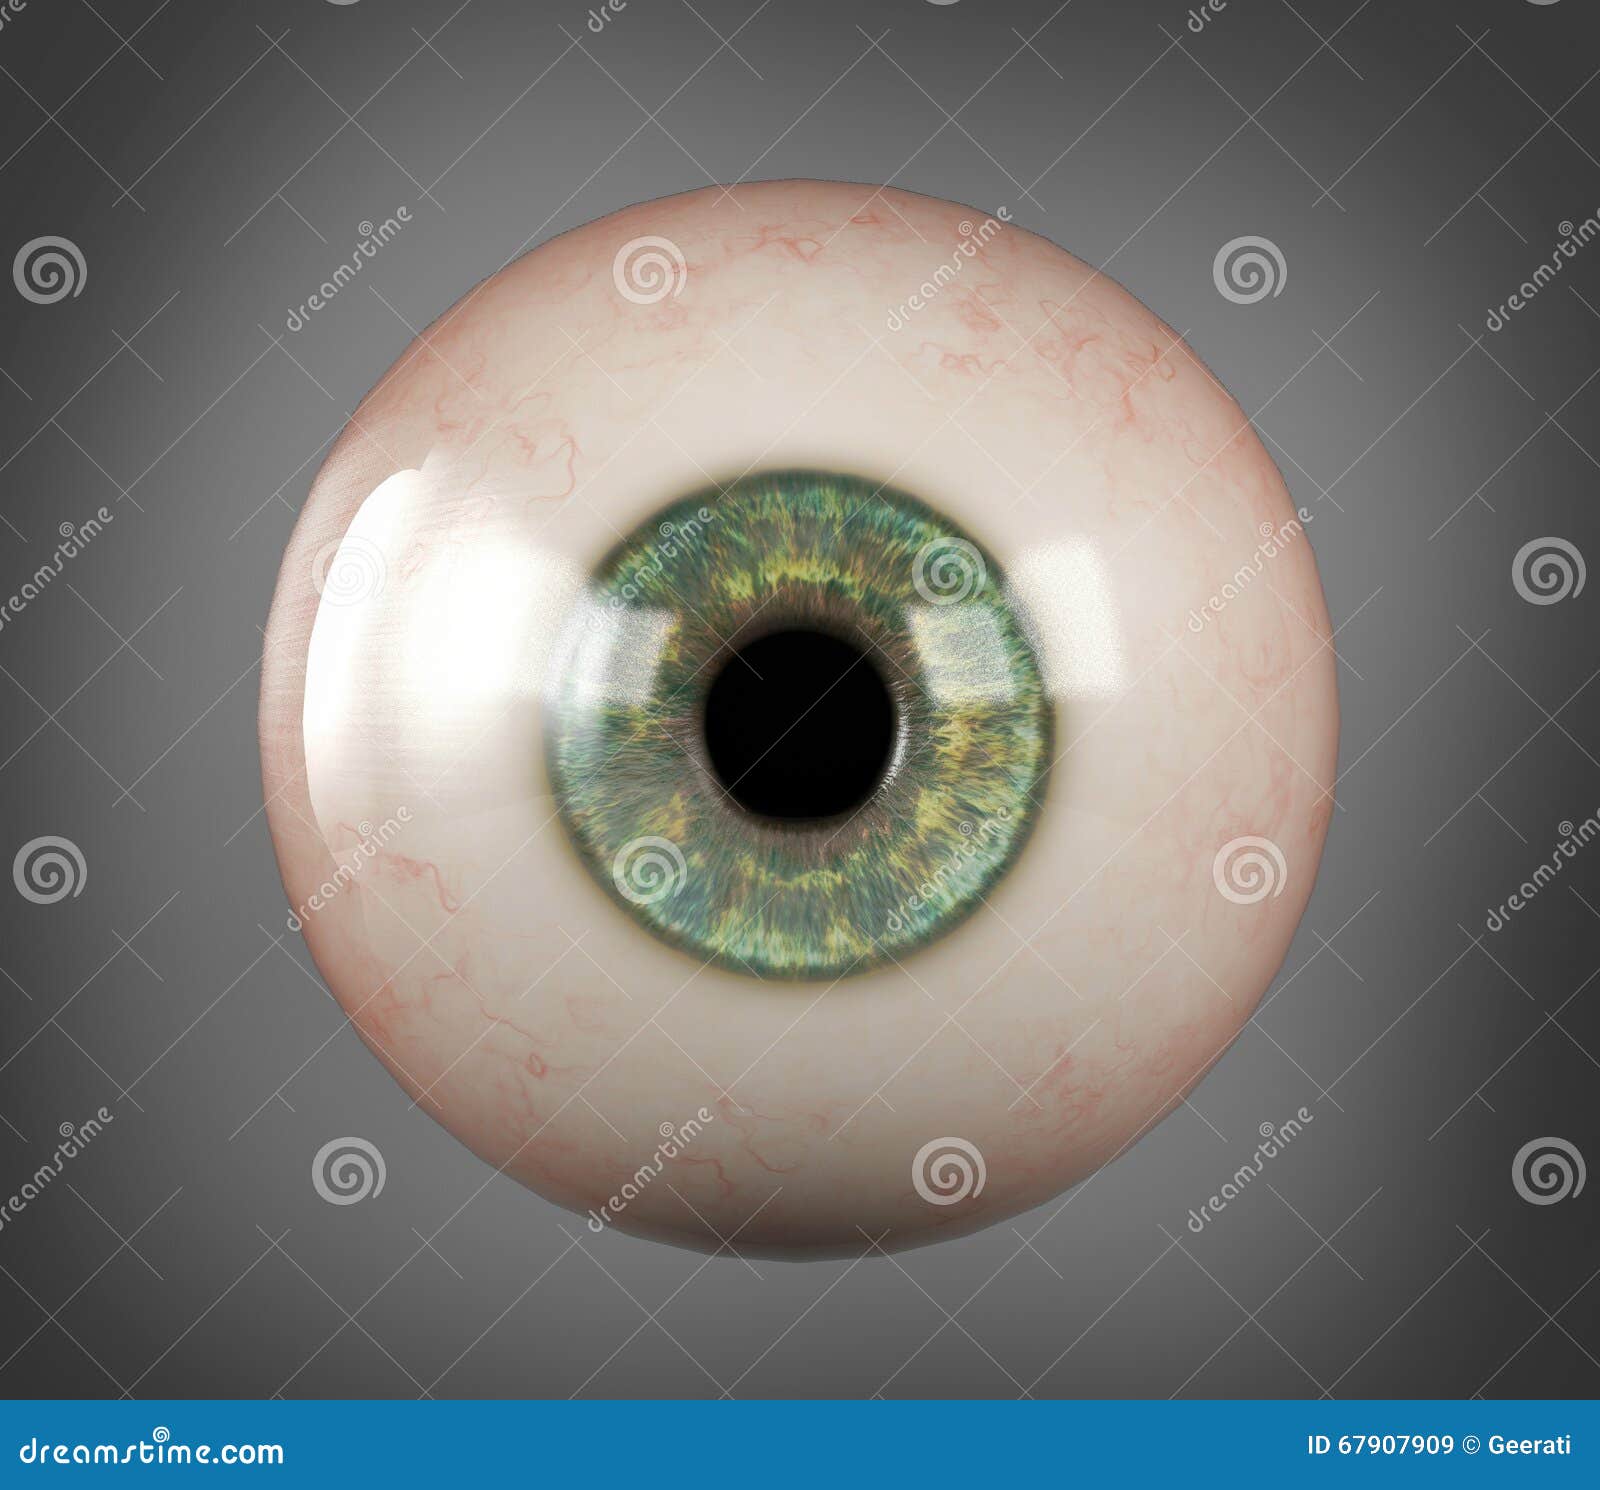 realistic human eyeball blue iris pupil